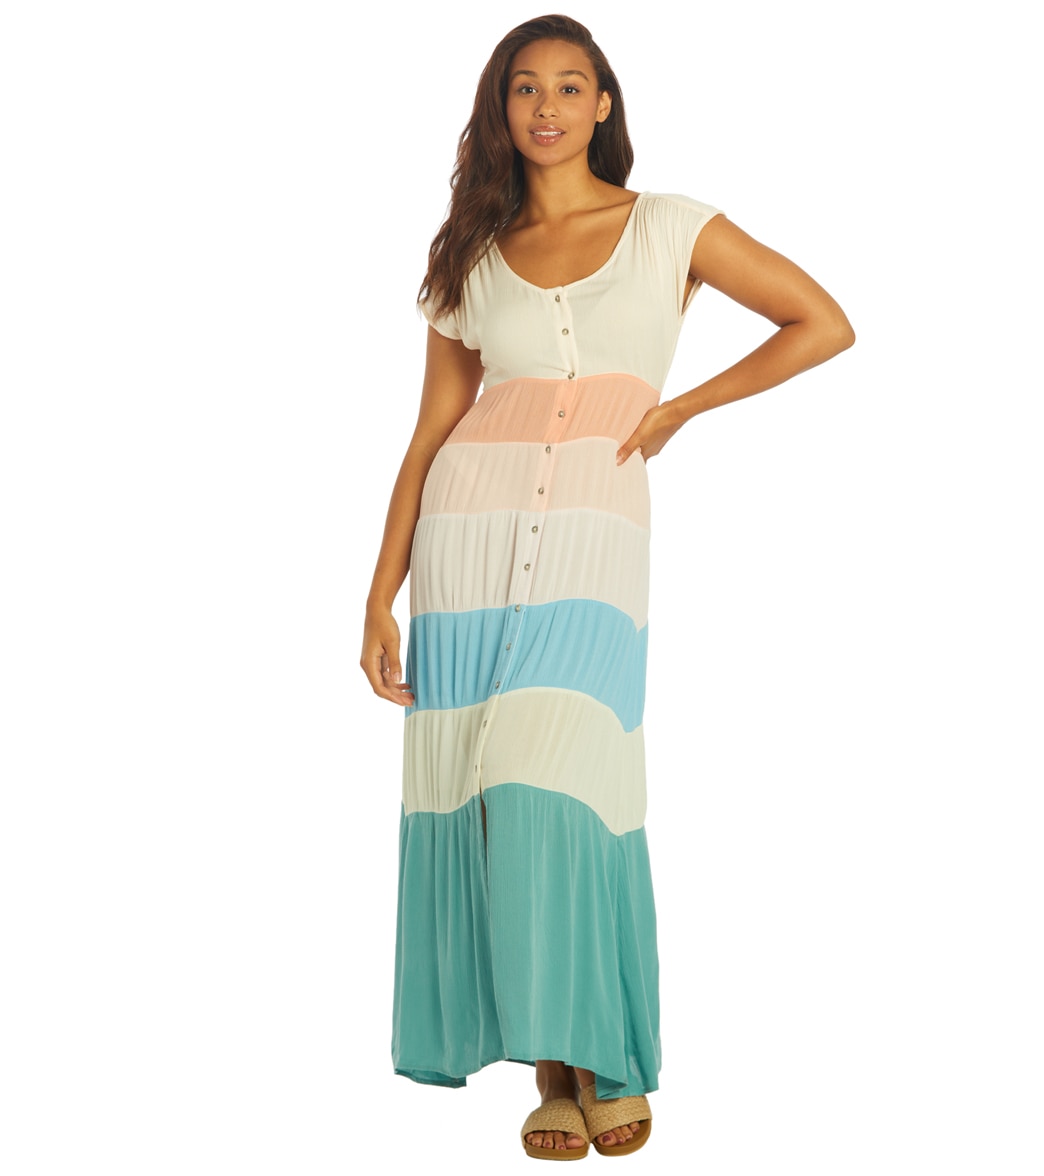 O'neill Women's Gemma Dress - Multi Colored Small - Swimoutlet.com